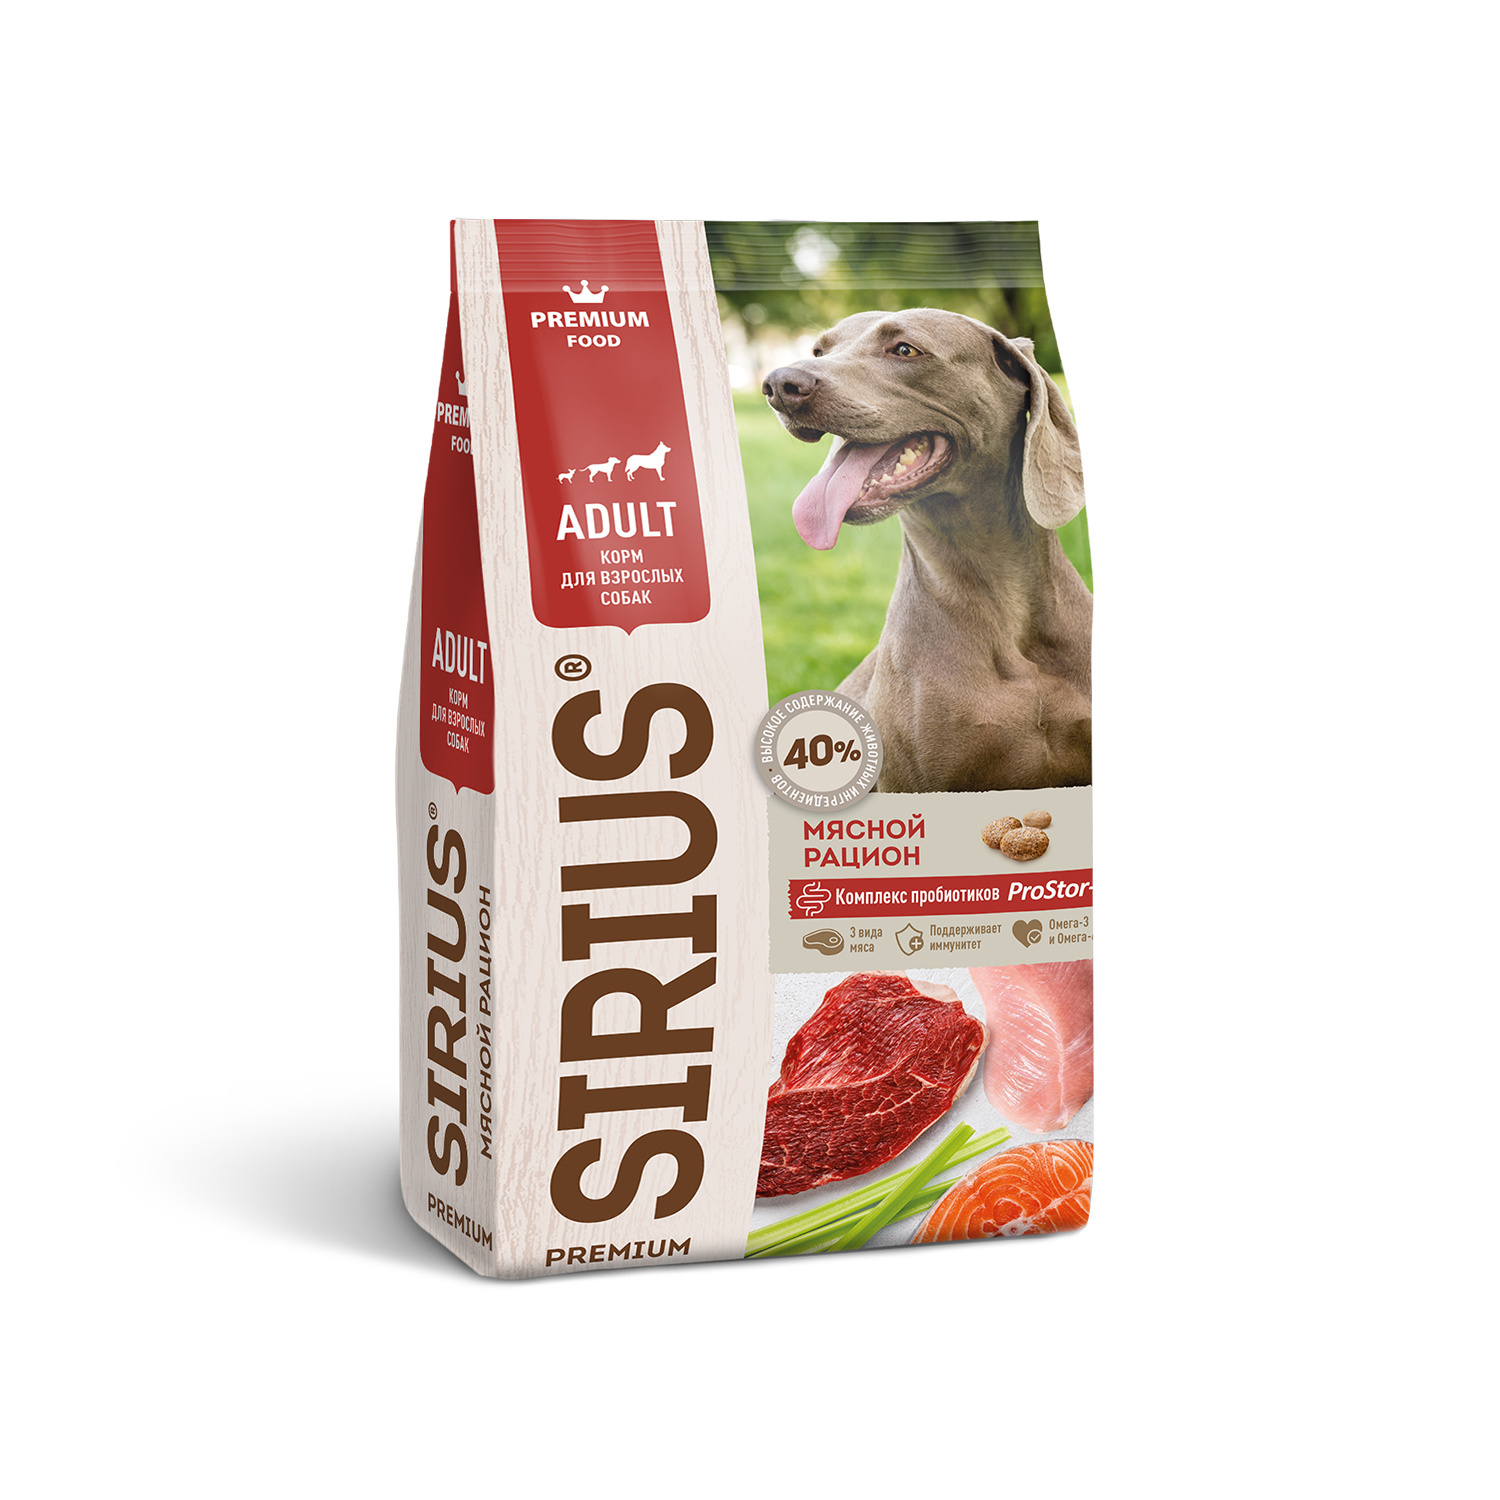 Sirius Sirius сухой корм для собак, мясной рацион (15 кг) sirius sirius сухой корм для собак говядина с овощами 15 кг